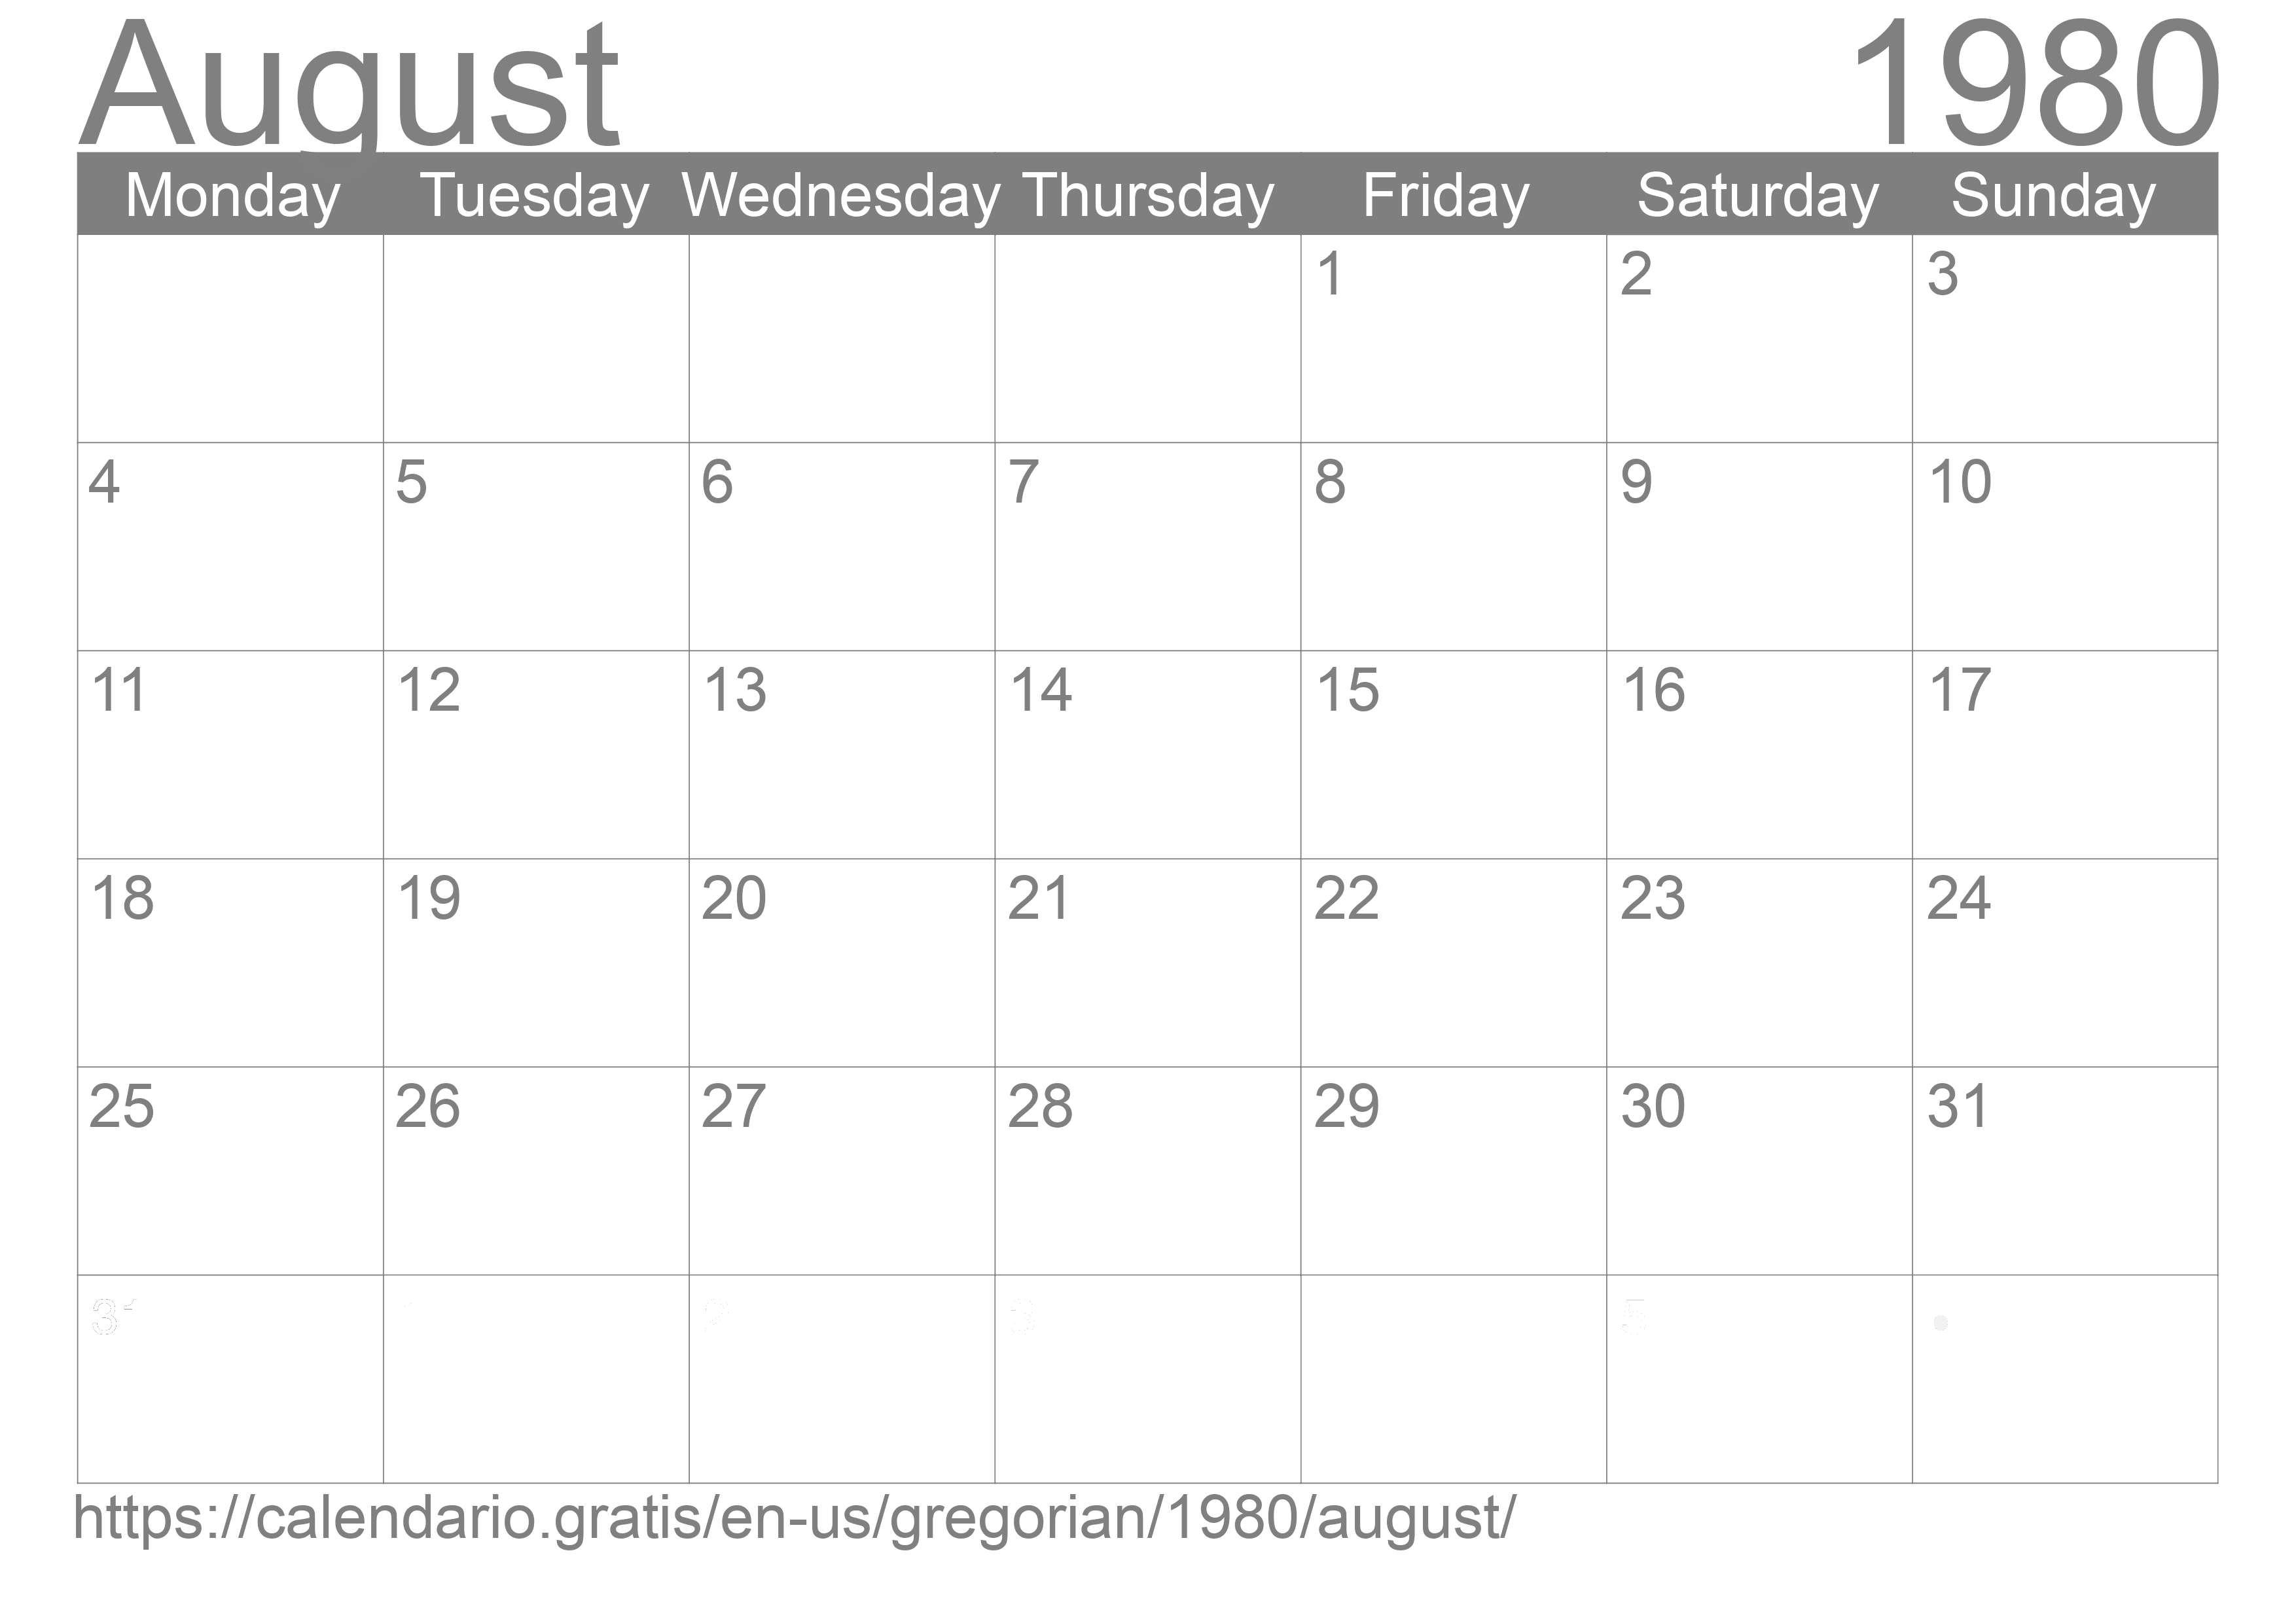 Calendar August 1980 to print